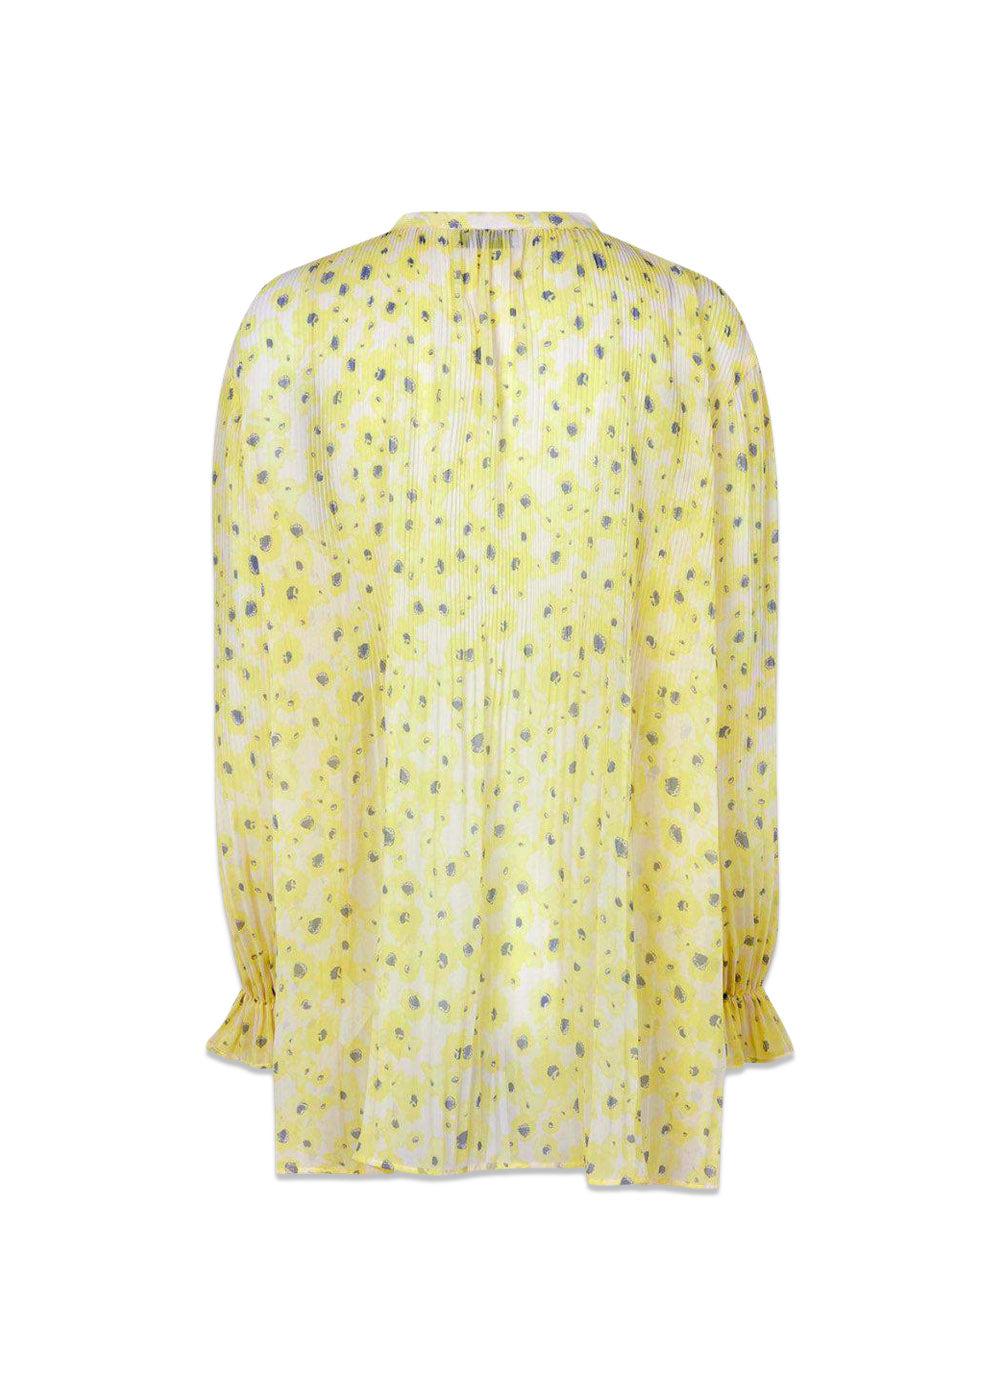 CruzMD print shirt - Aqua Yellow Flower